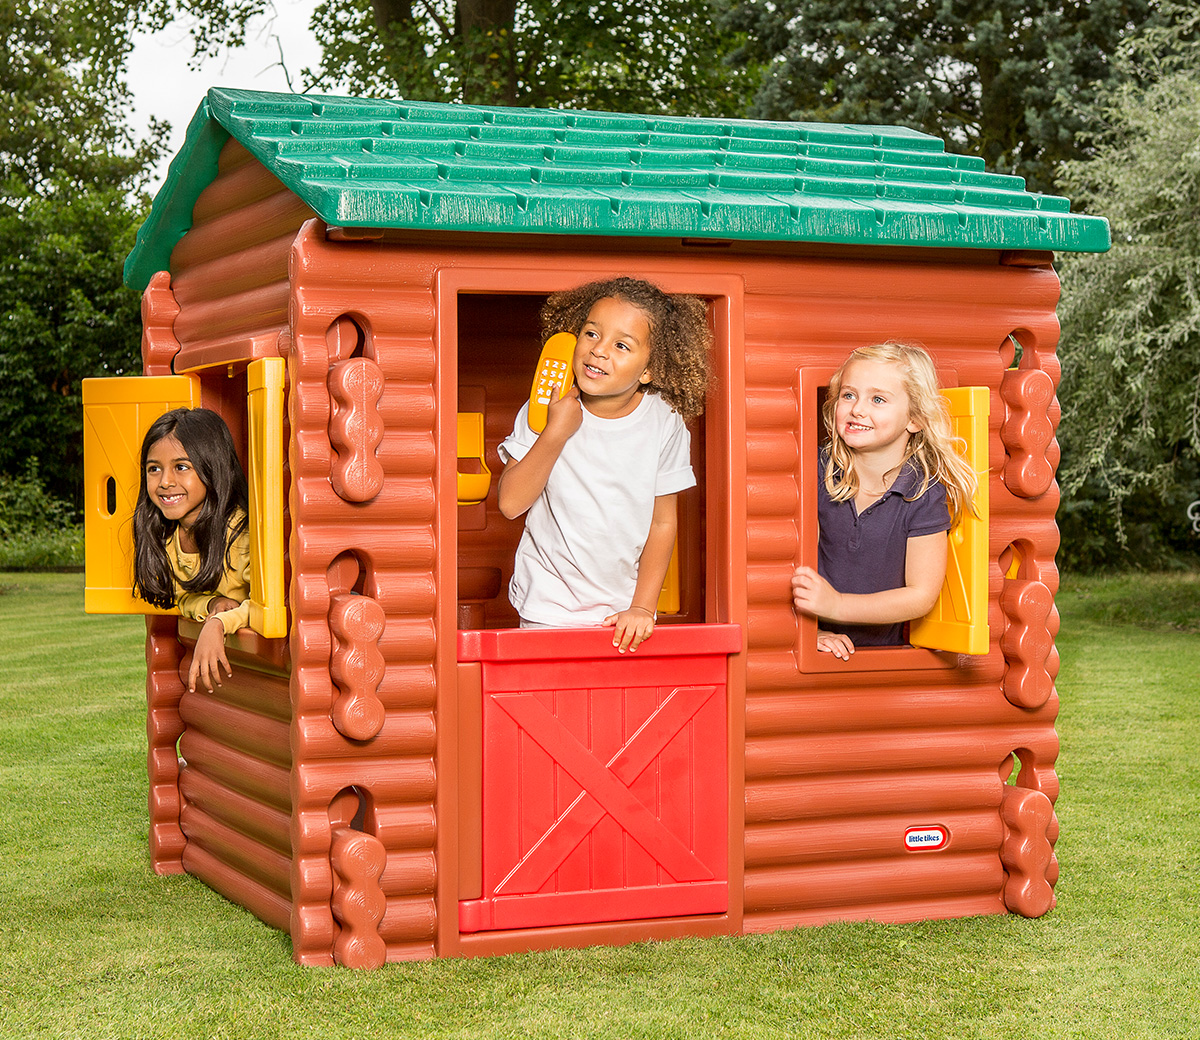 little tikes wooden playhouse